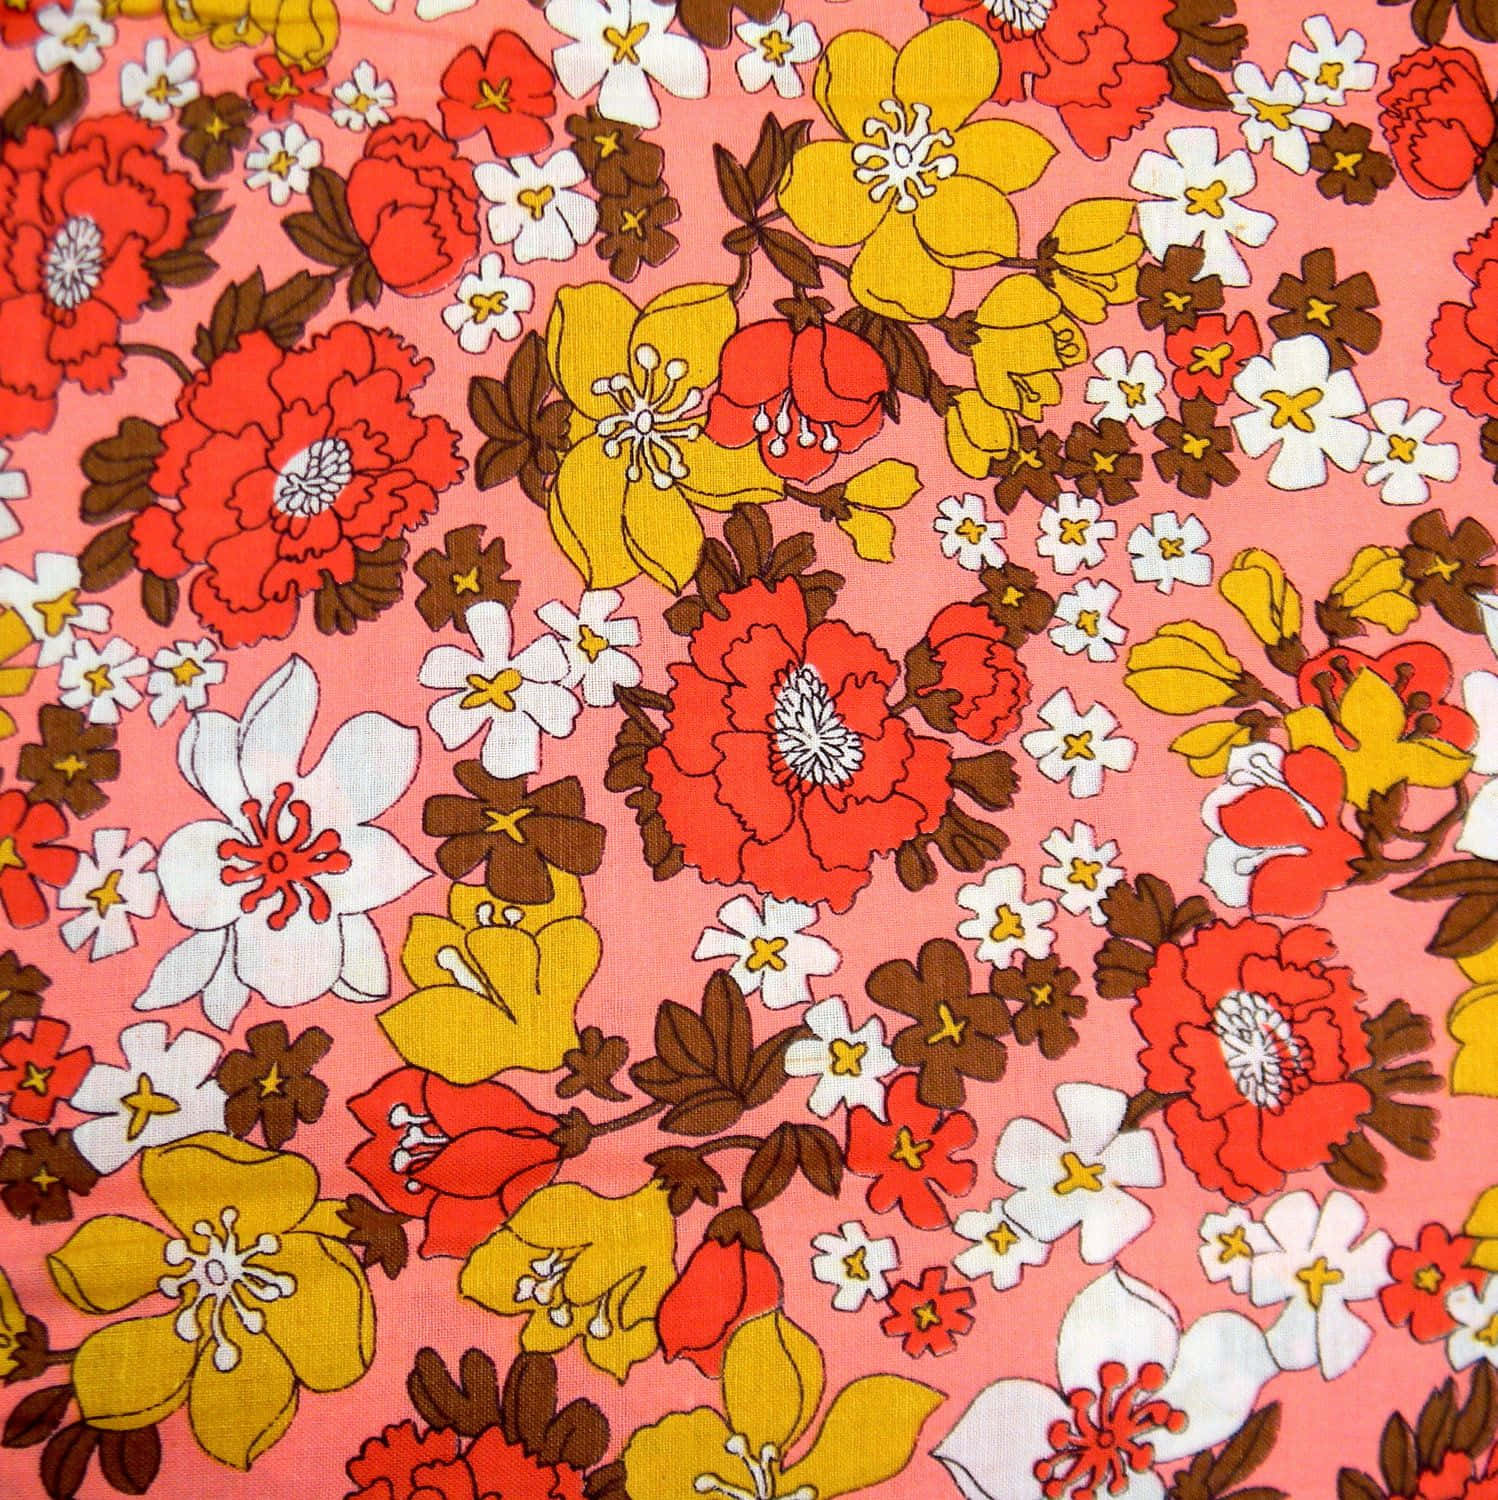 Rosablumenstoff Im Stil Der 70er Jahre Wallpaper